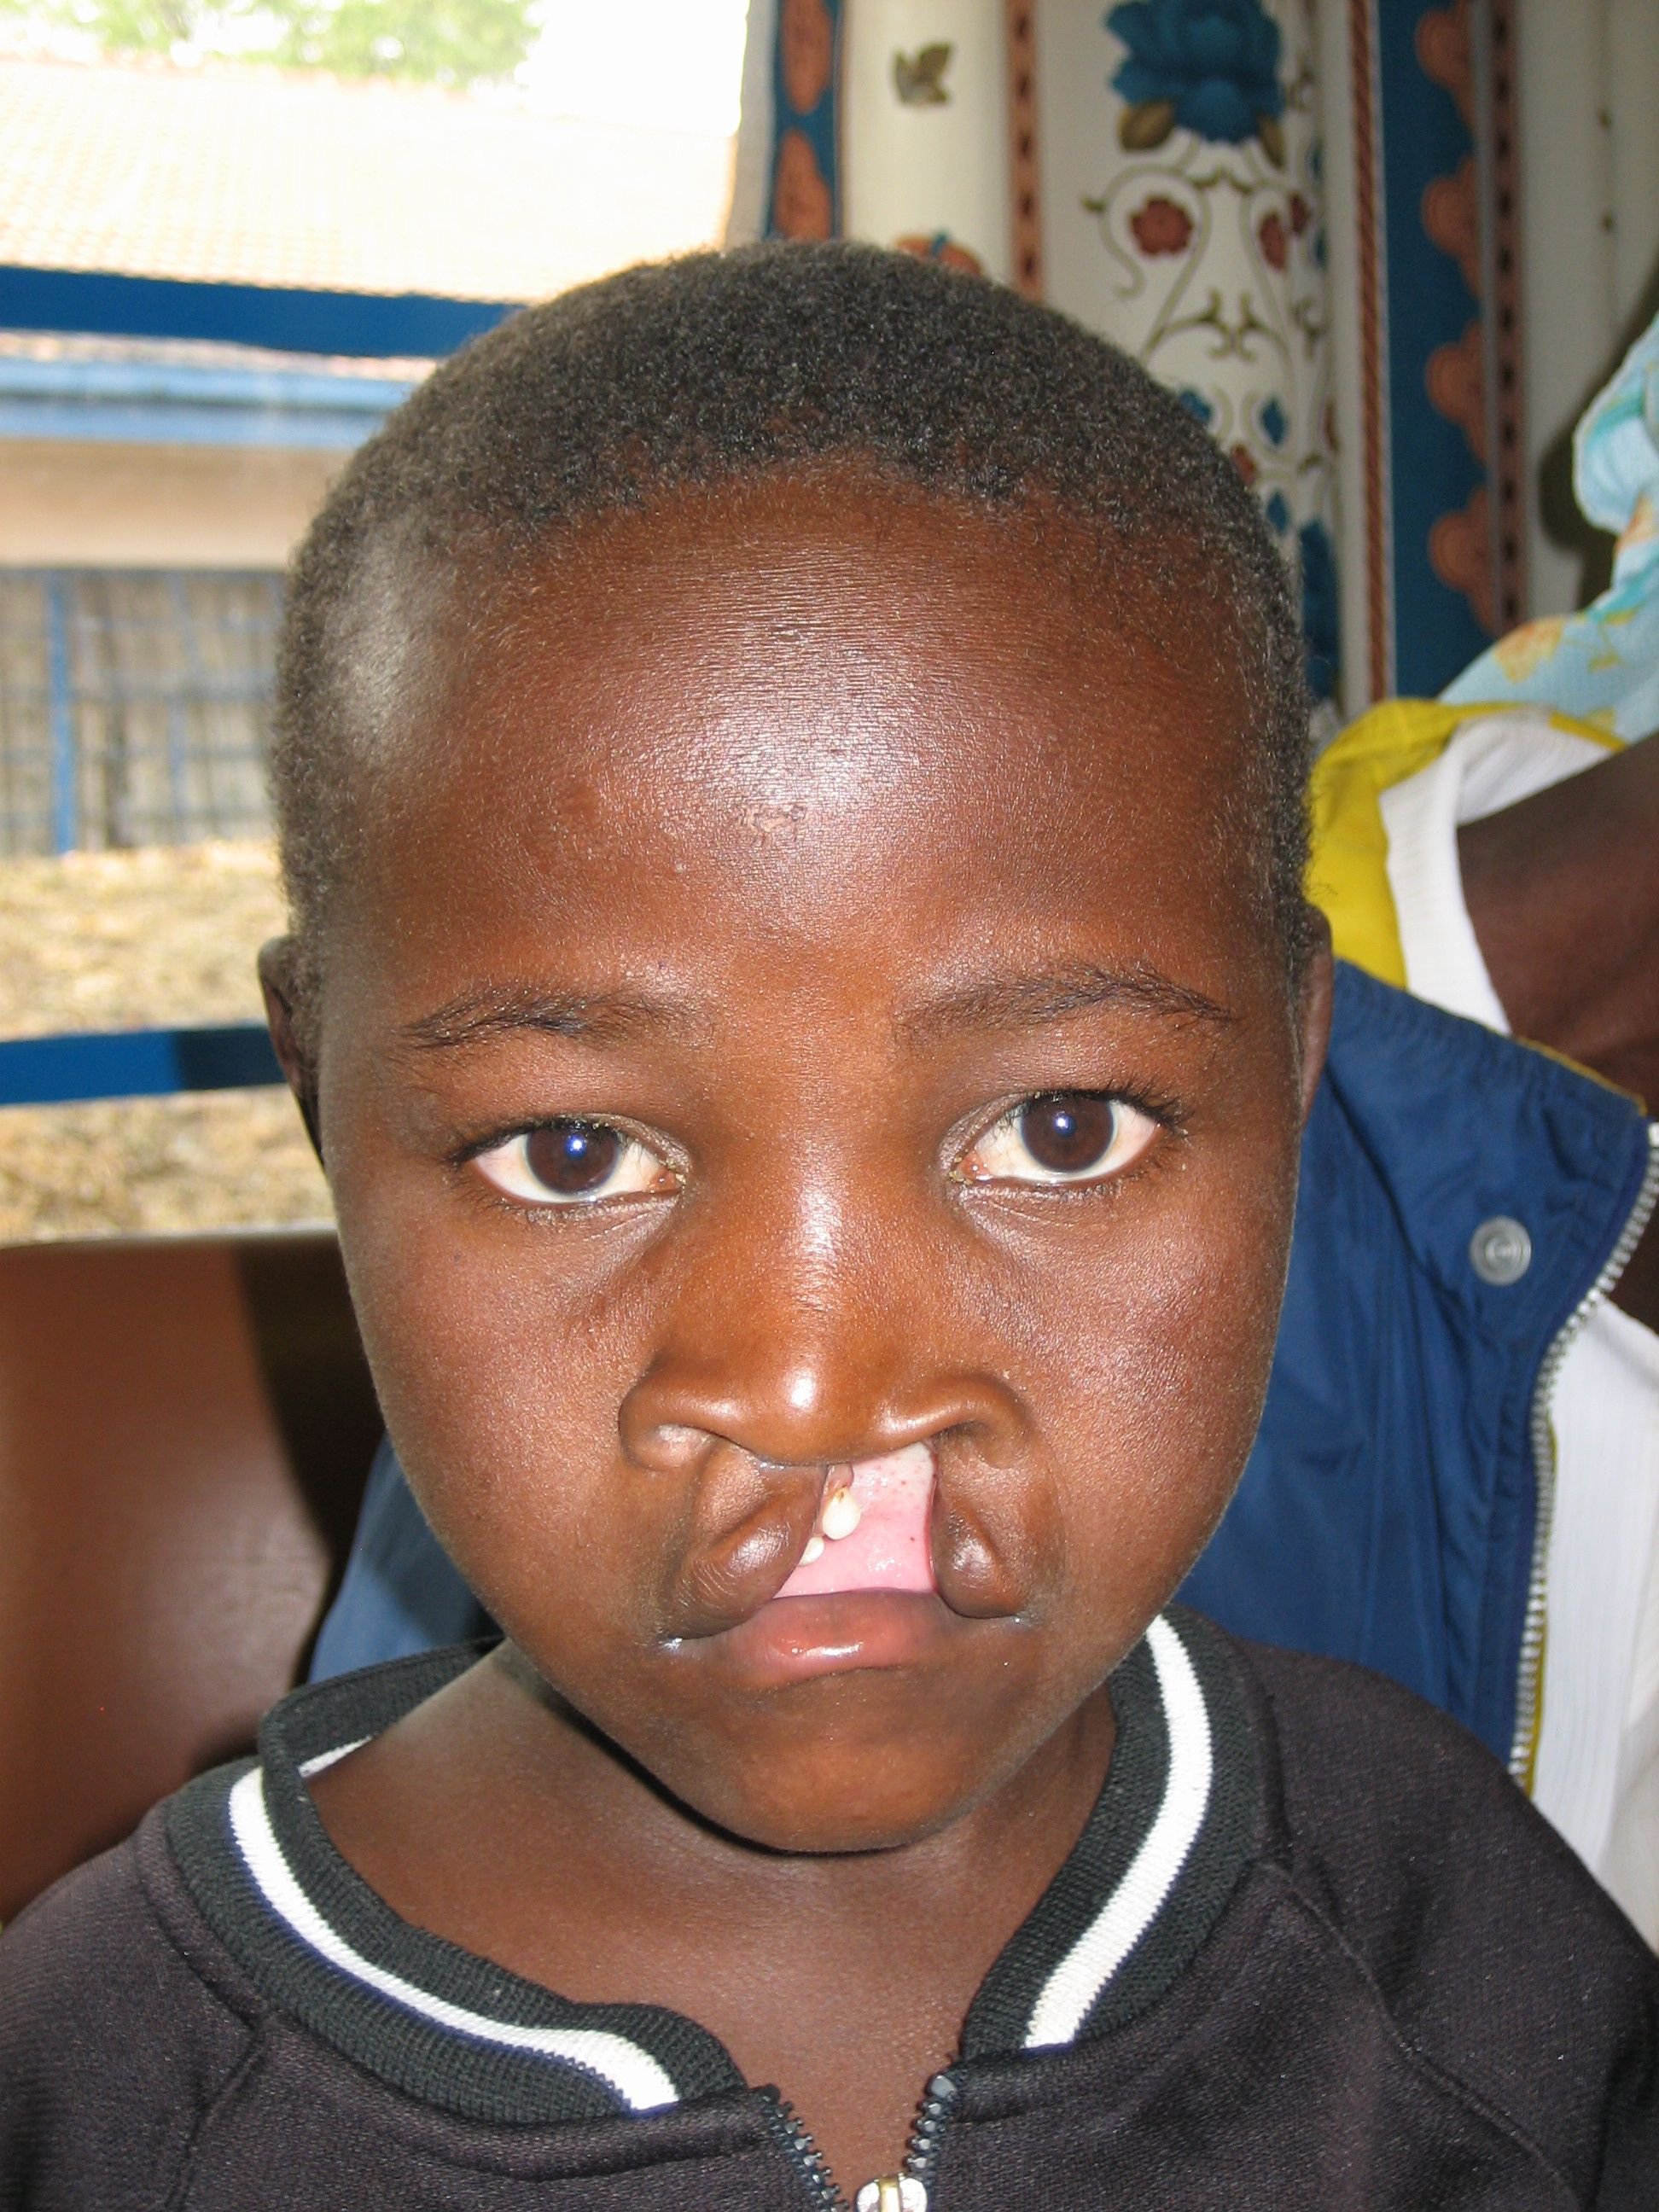 Zimbabwe child with cleft lip